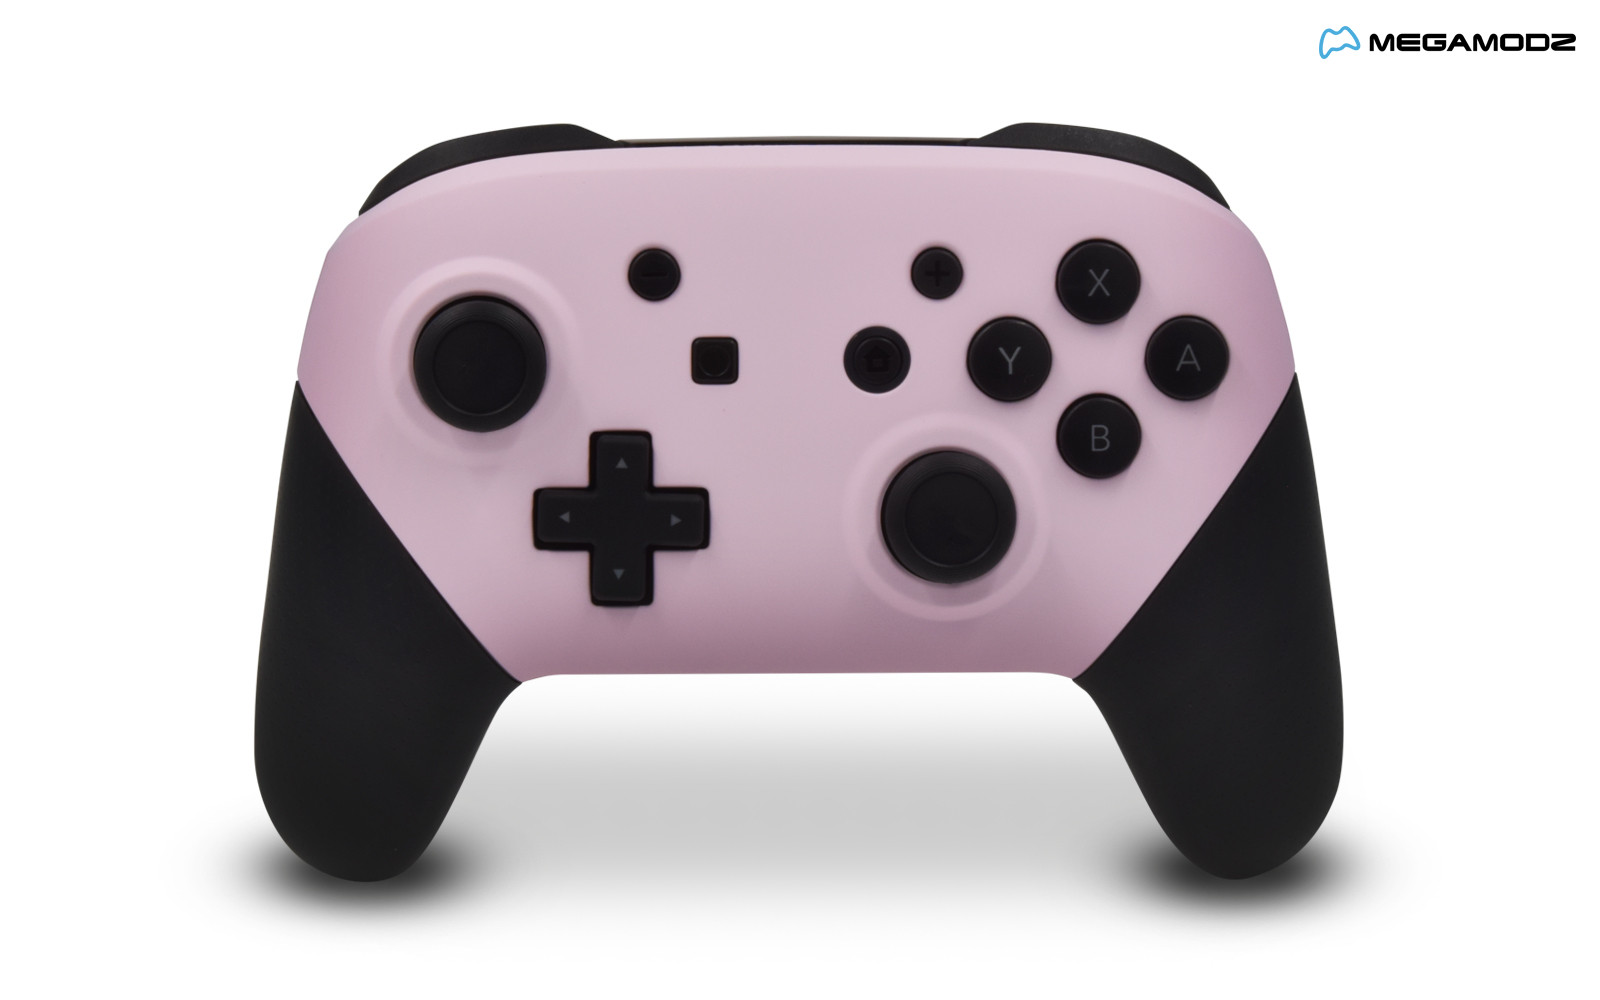 pink nintendo switch pro controller